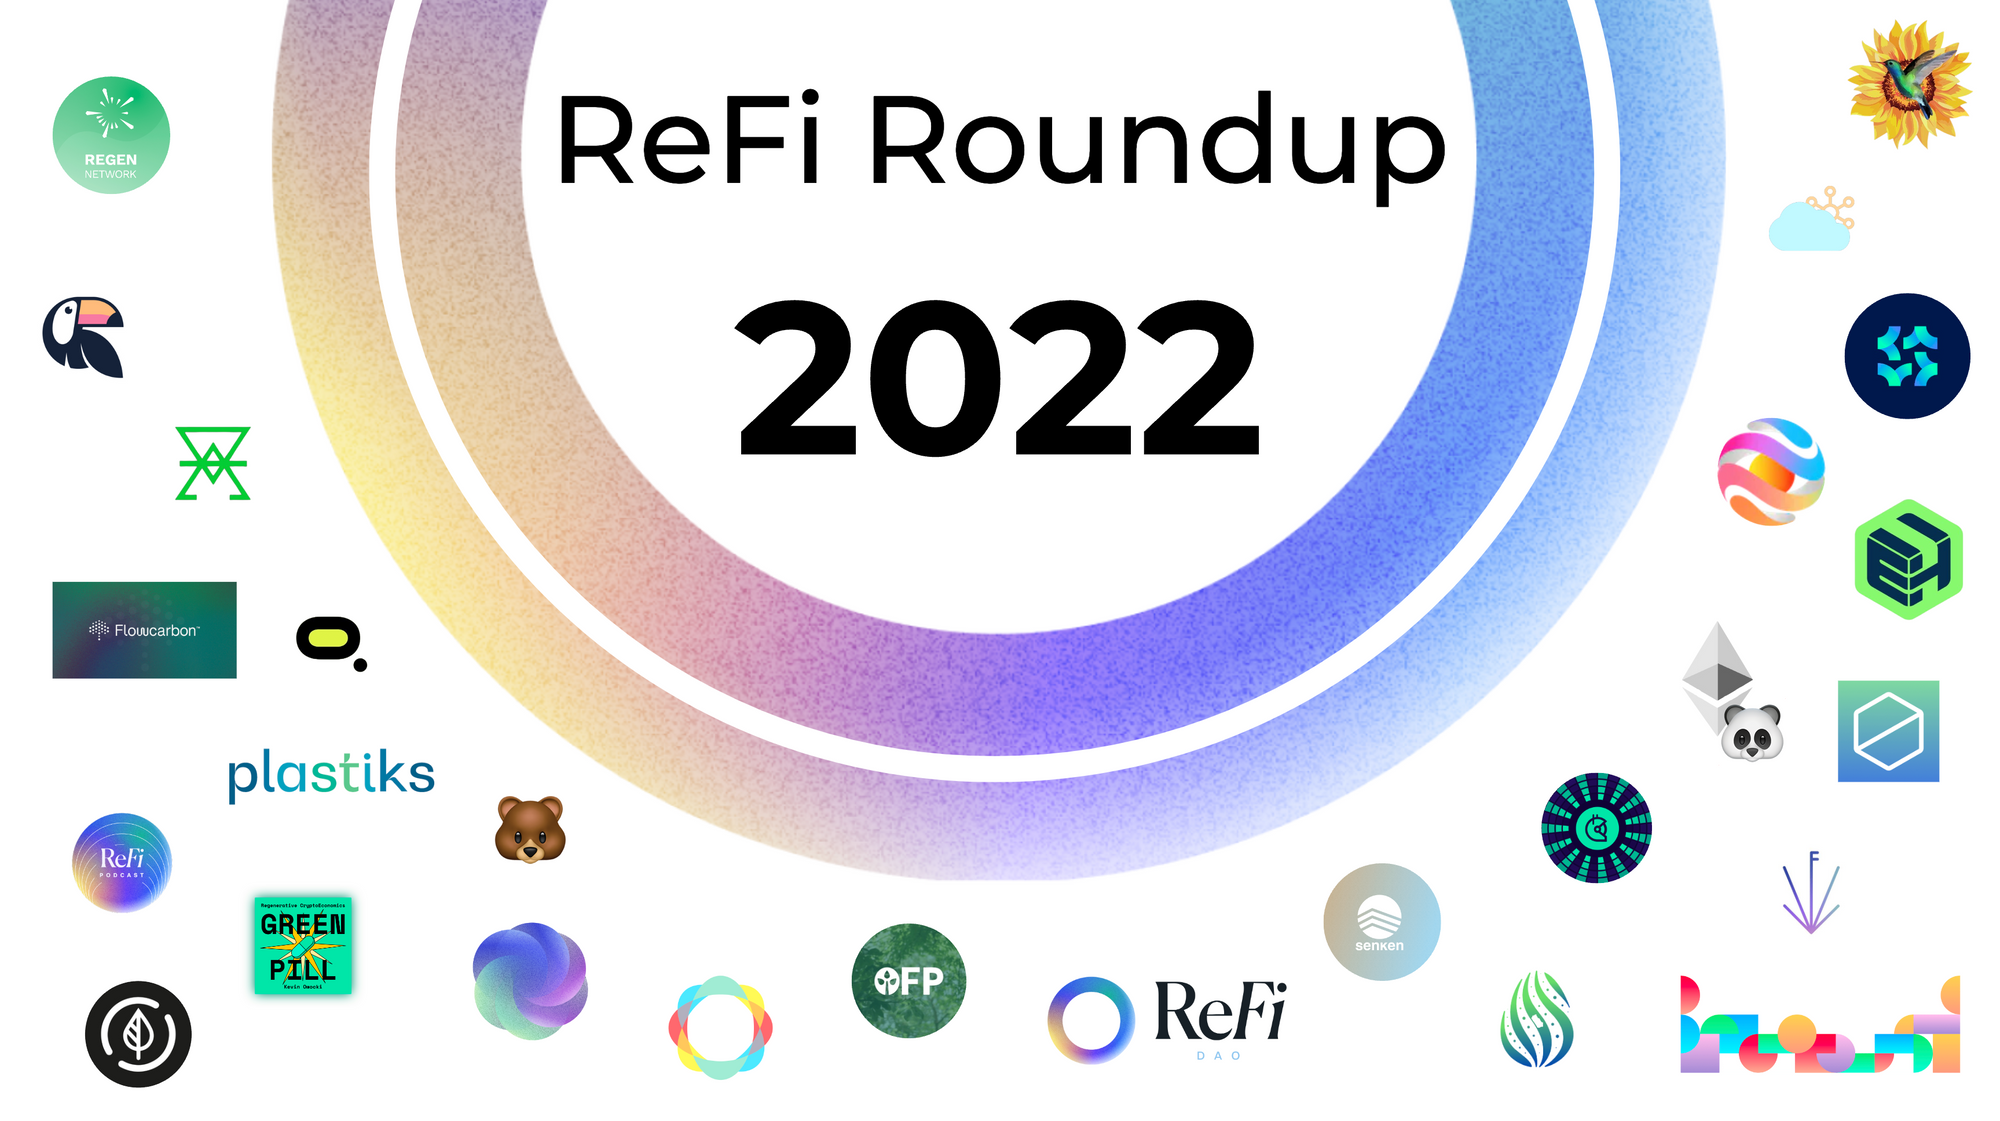 ReFi Roundup 2022 - The Year of Regenerative Finance!